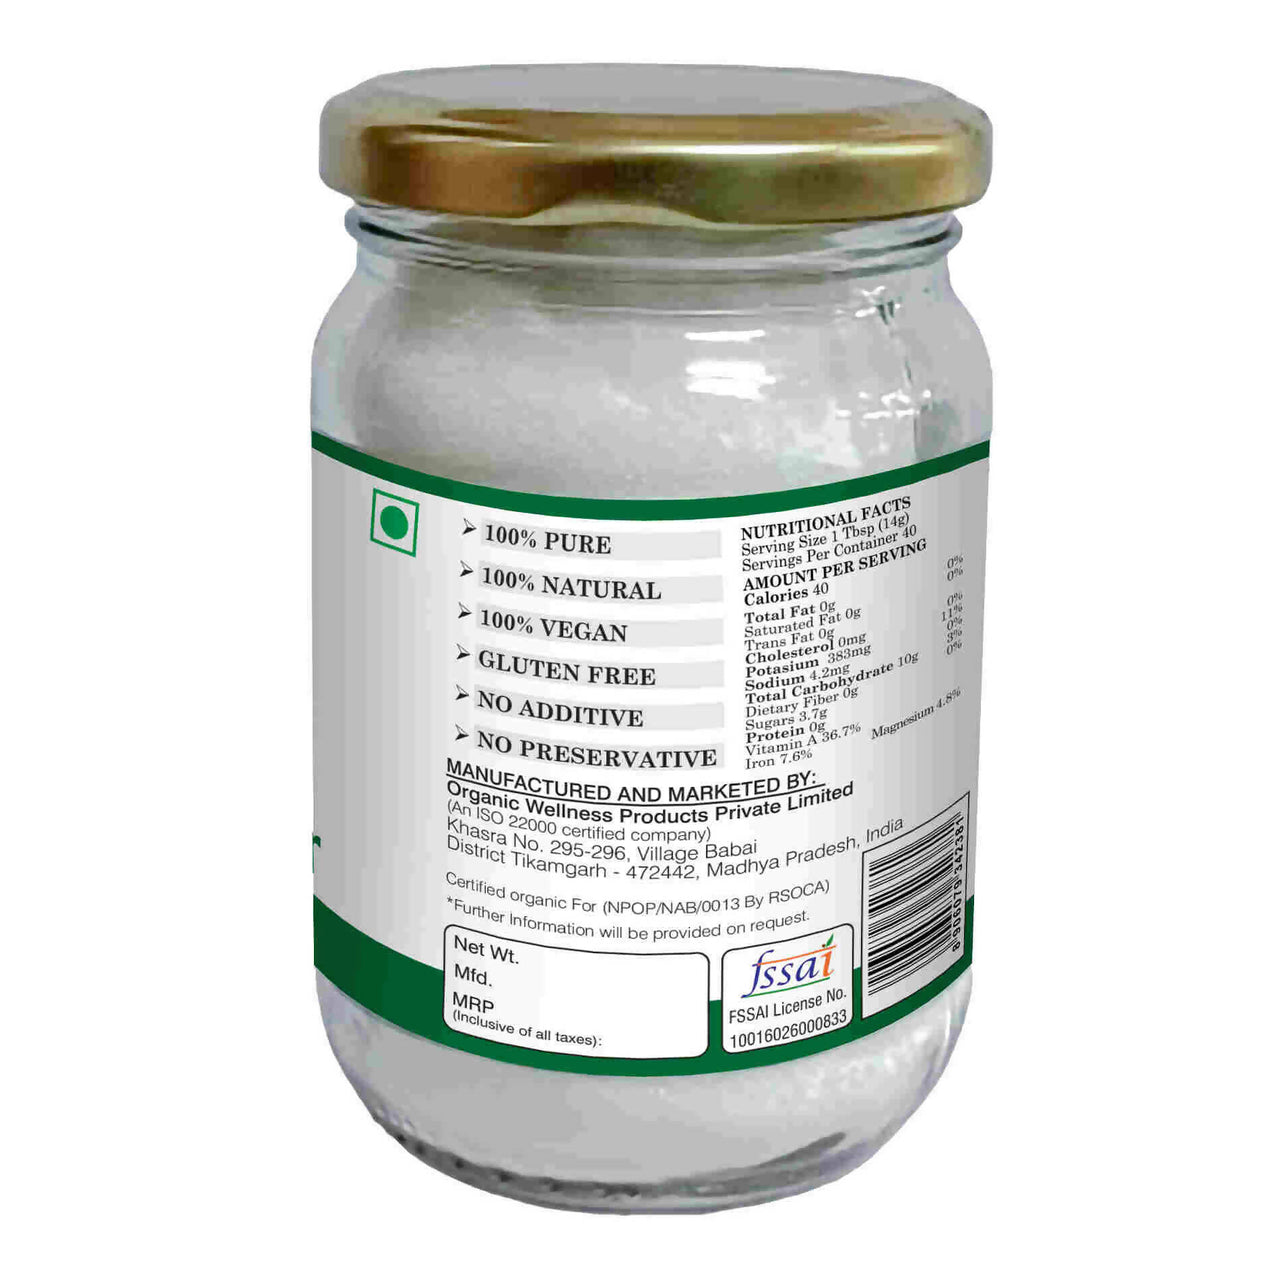 Organic Wellness Coconut Water Powder - Distacart